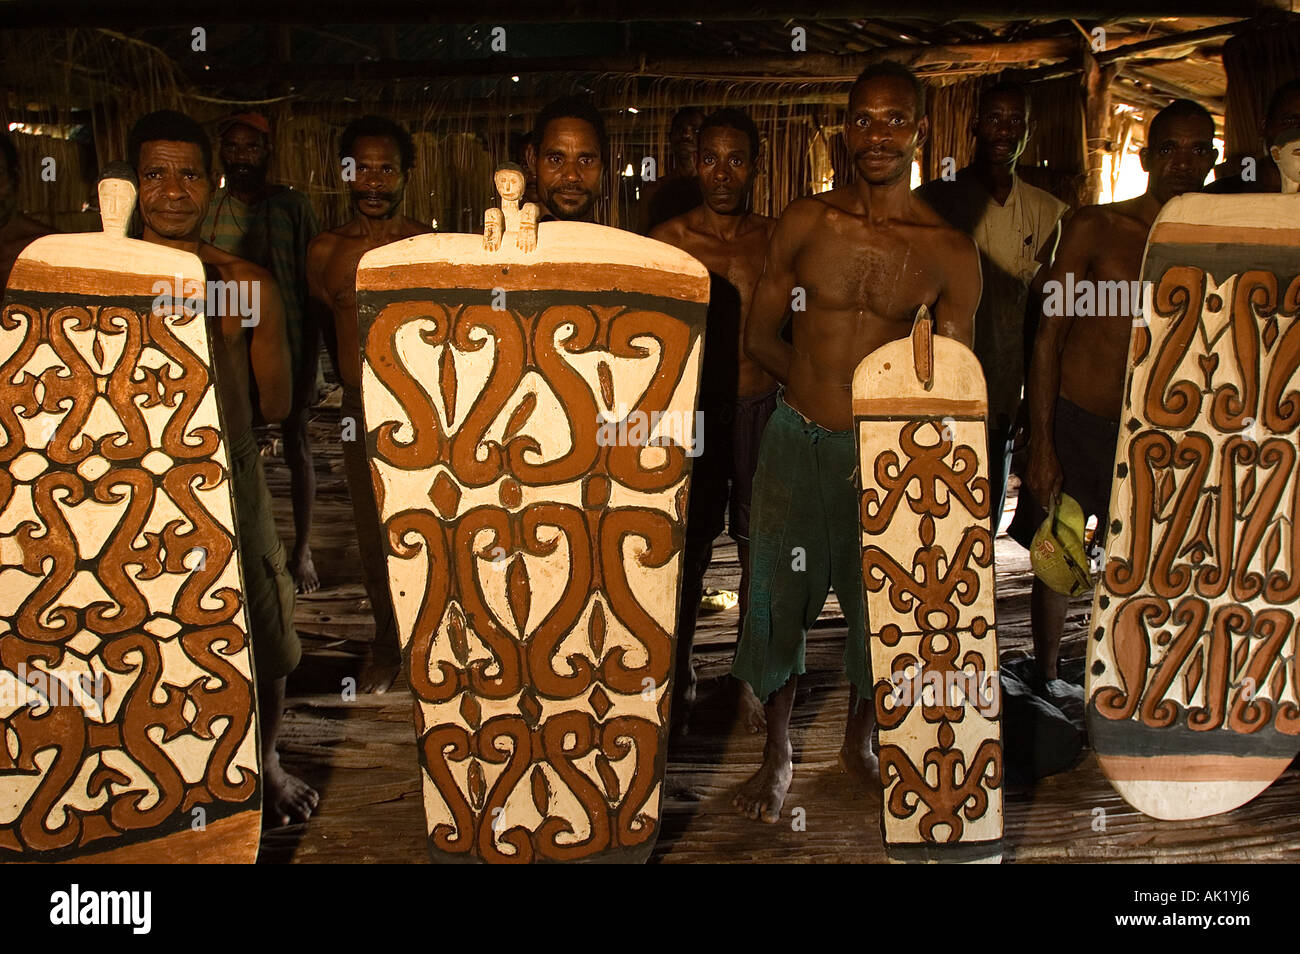 Asmat woodcarvers showing their traditional shields made of tree bark in Omandeseb Village, Irian Jaya, Indonesia. Stock Photo